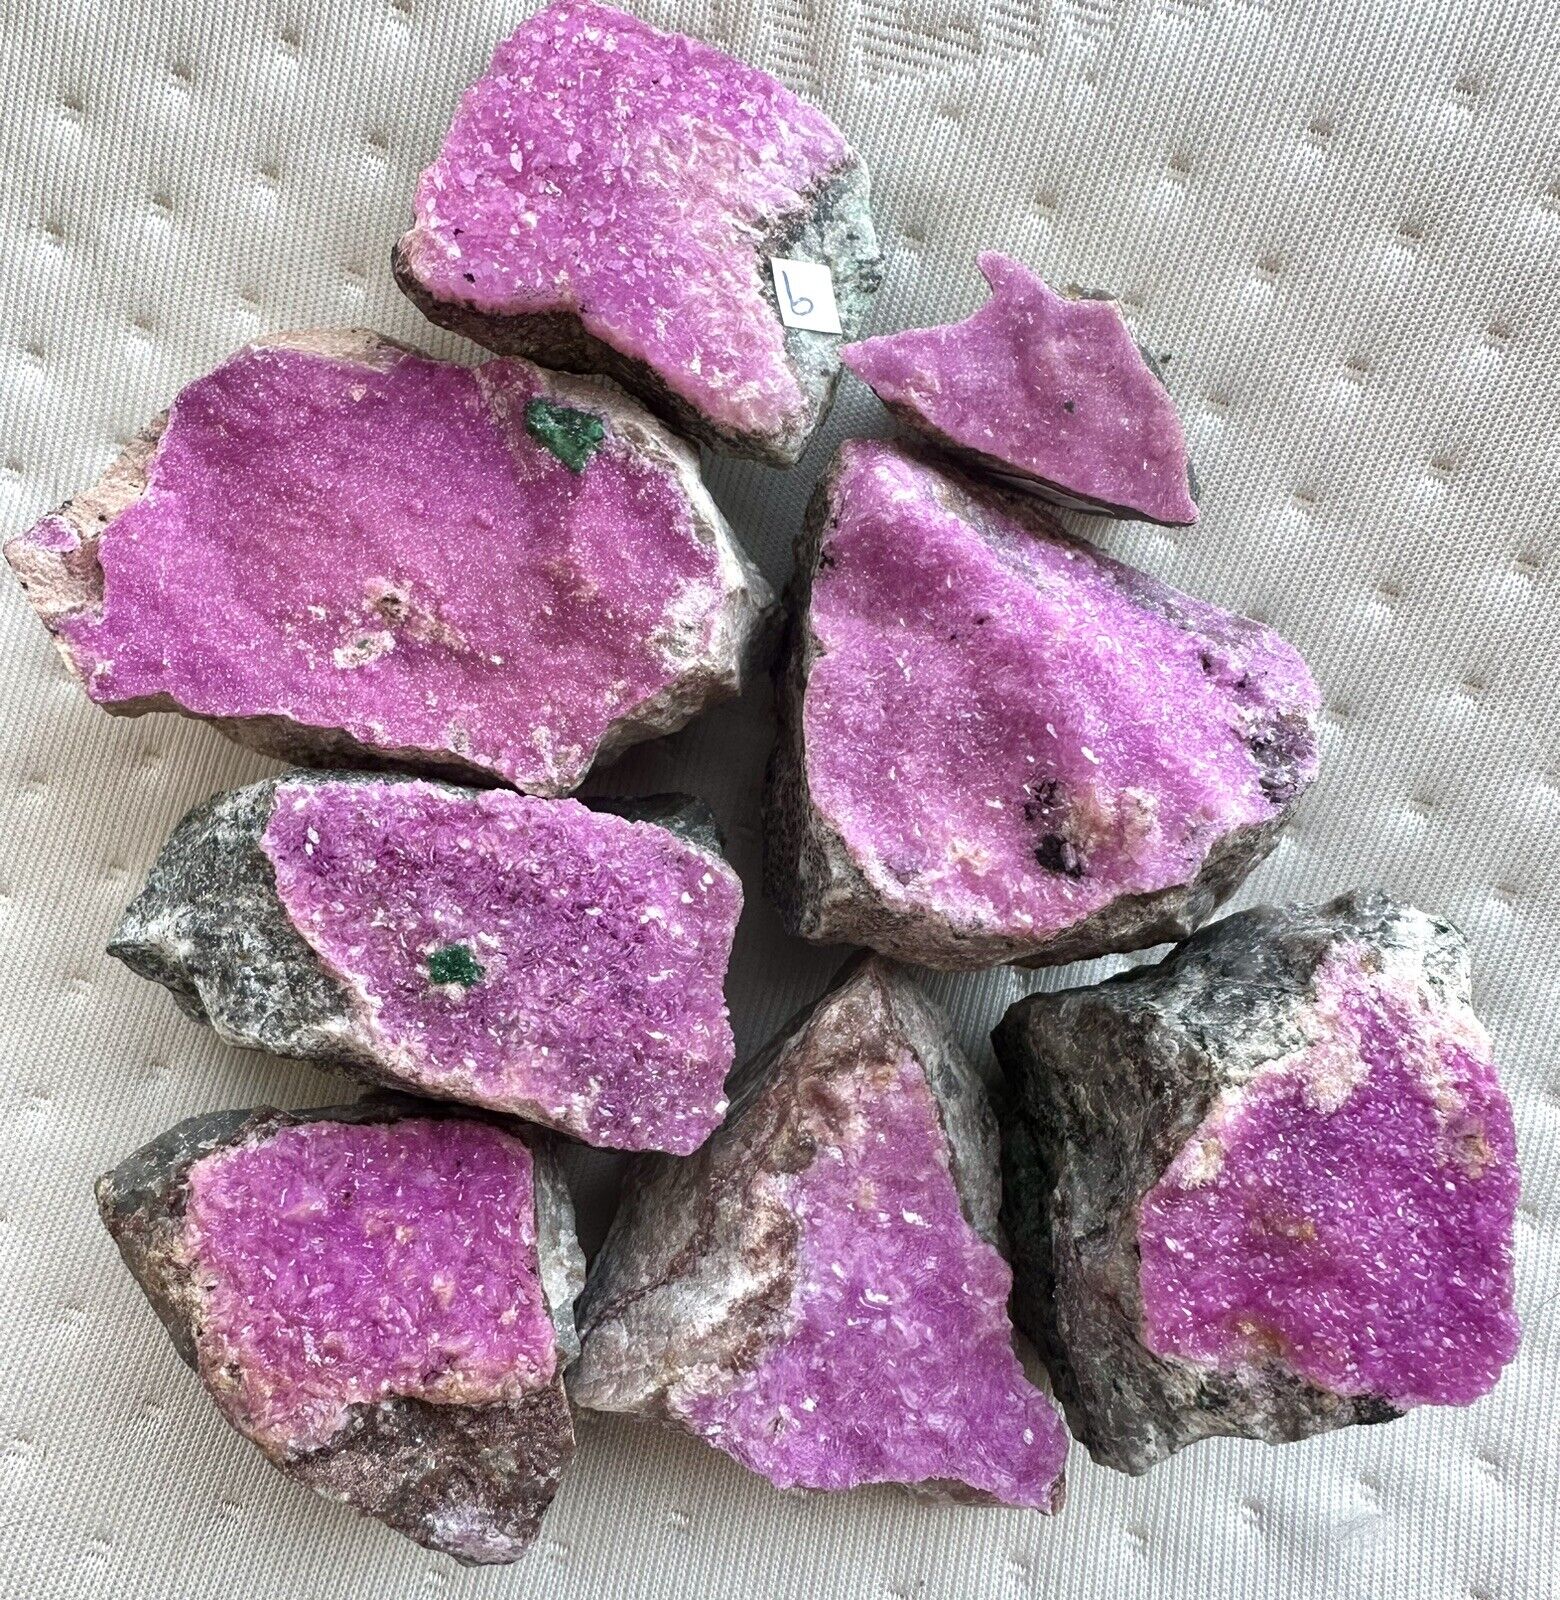 Pink Calcite Drusy Druzy Rough Specimen Lot Of 8 Pieces Totals 12.6oz/357g. LOOK